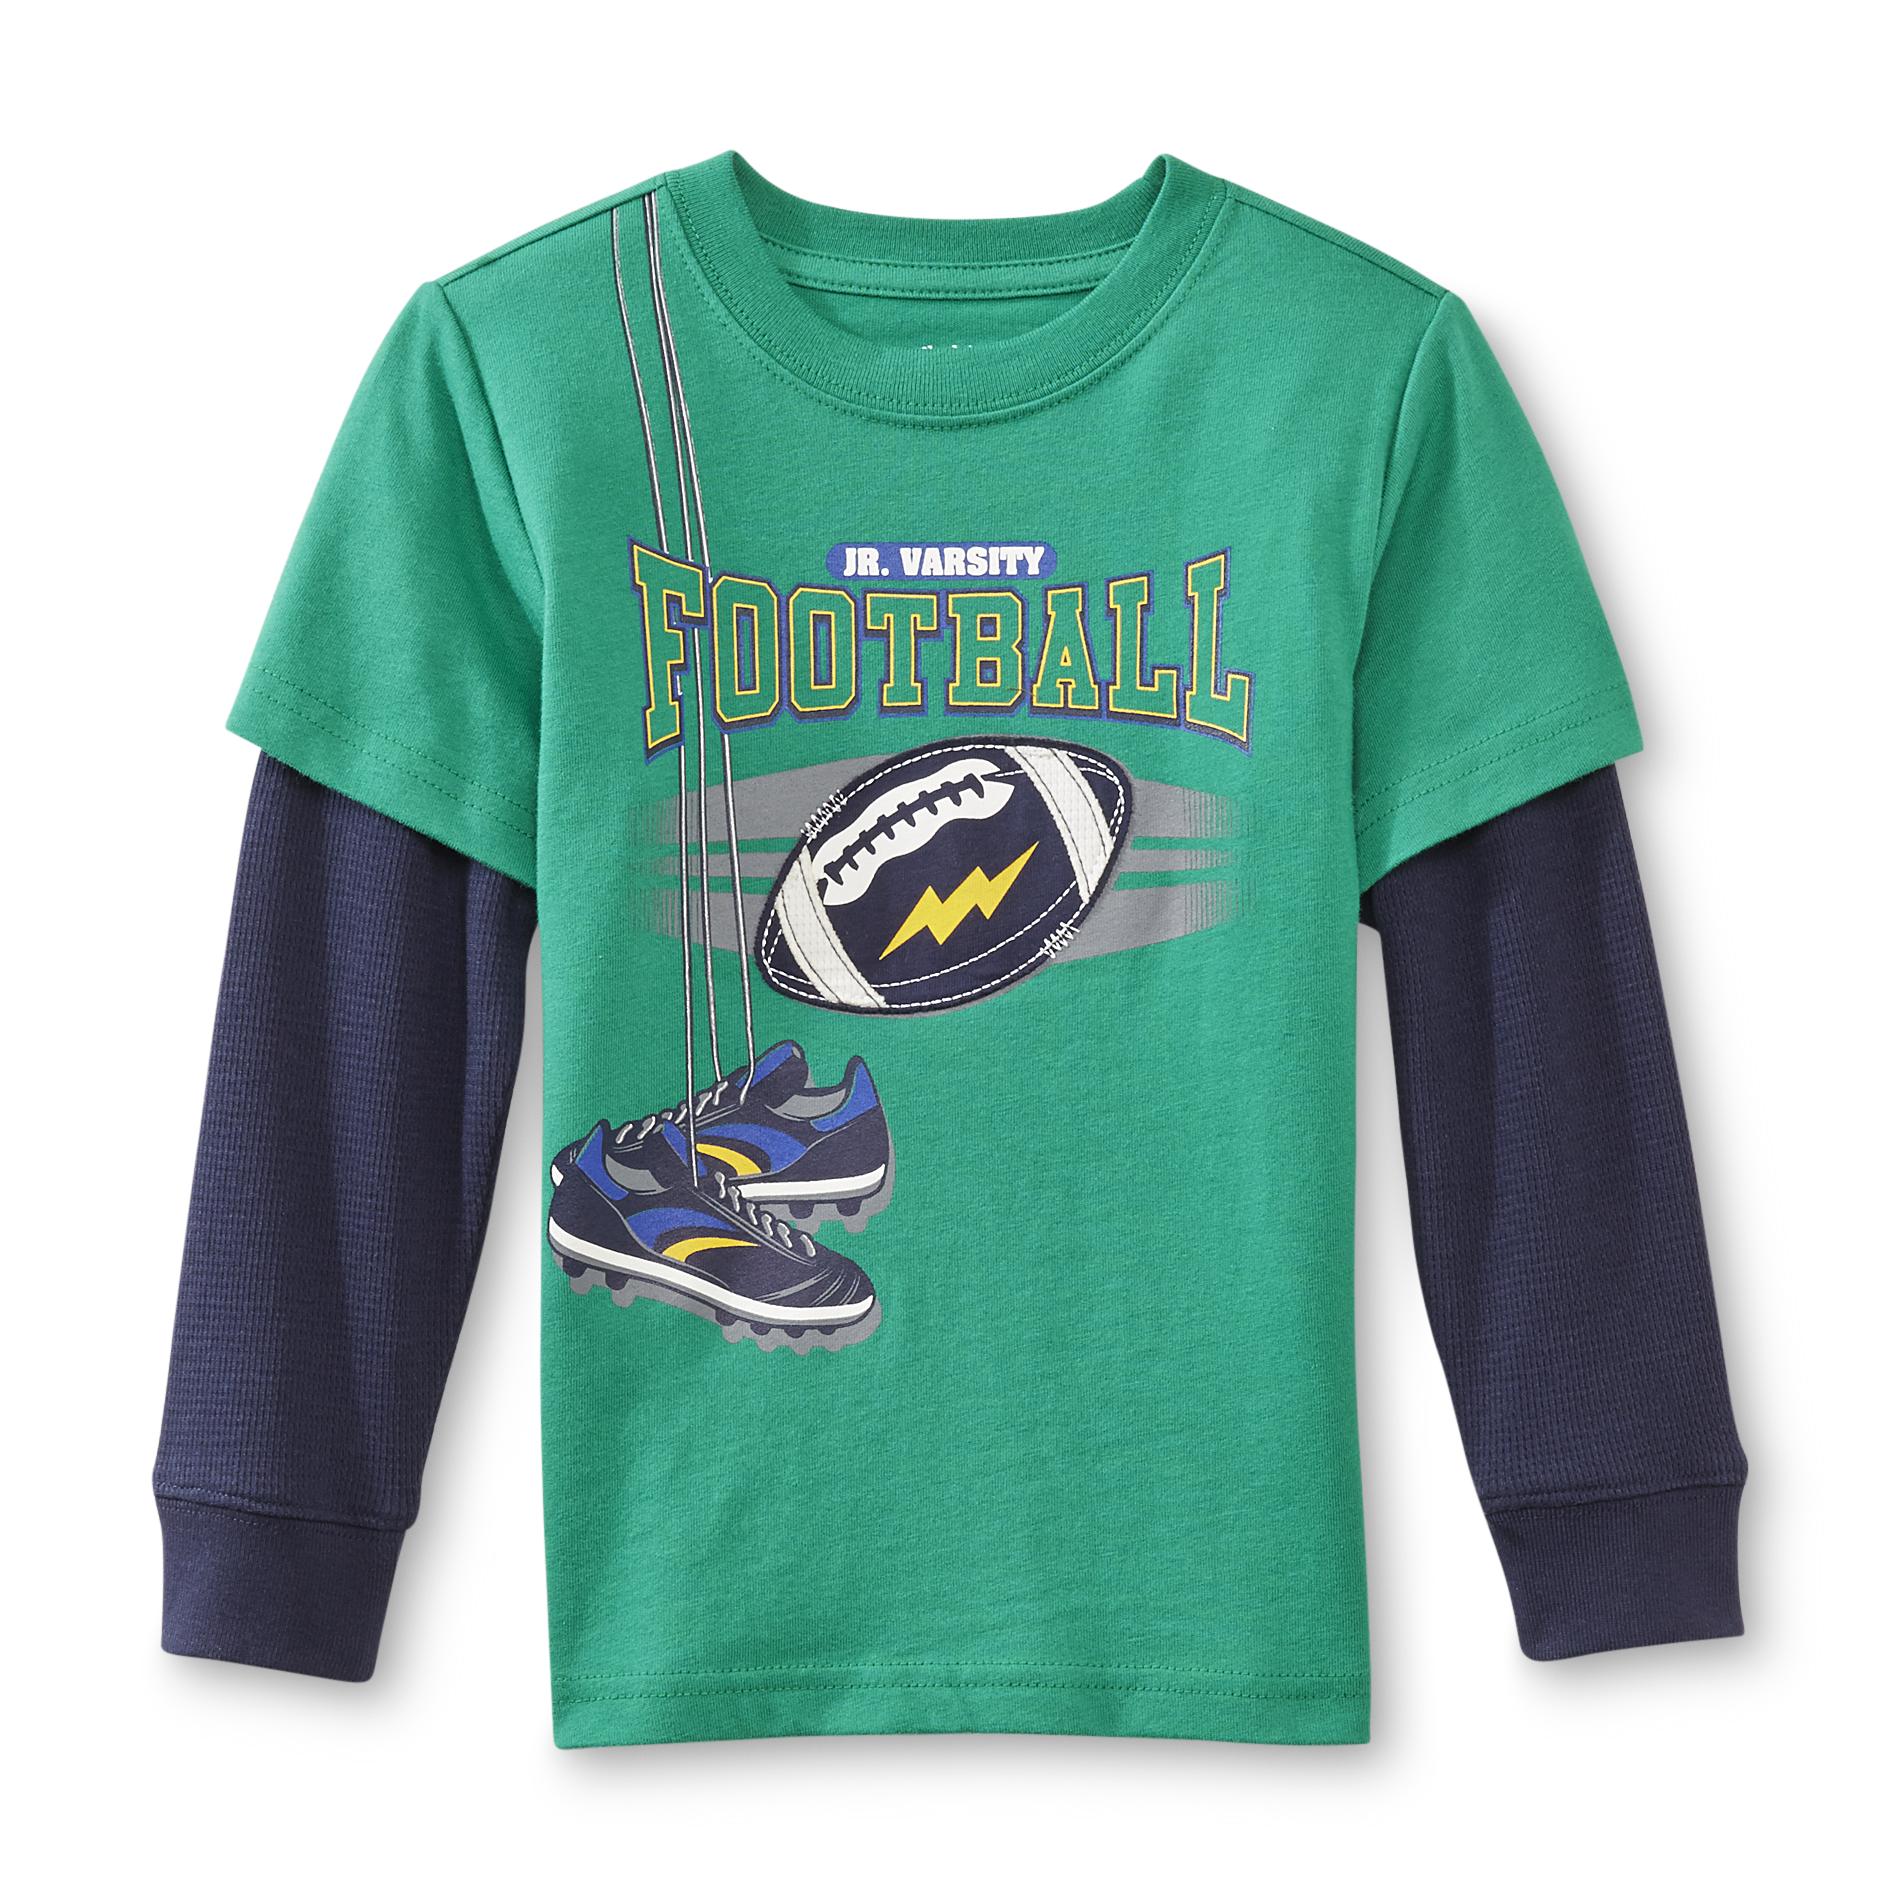 Toughskins Infant & Toddler Boy's Graphic T-Shirt - Football